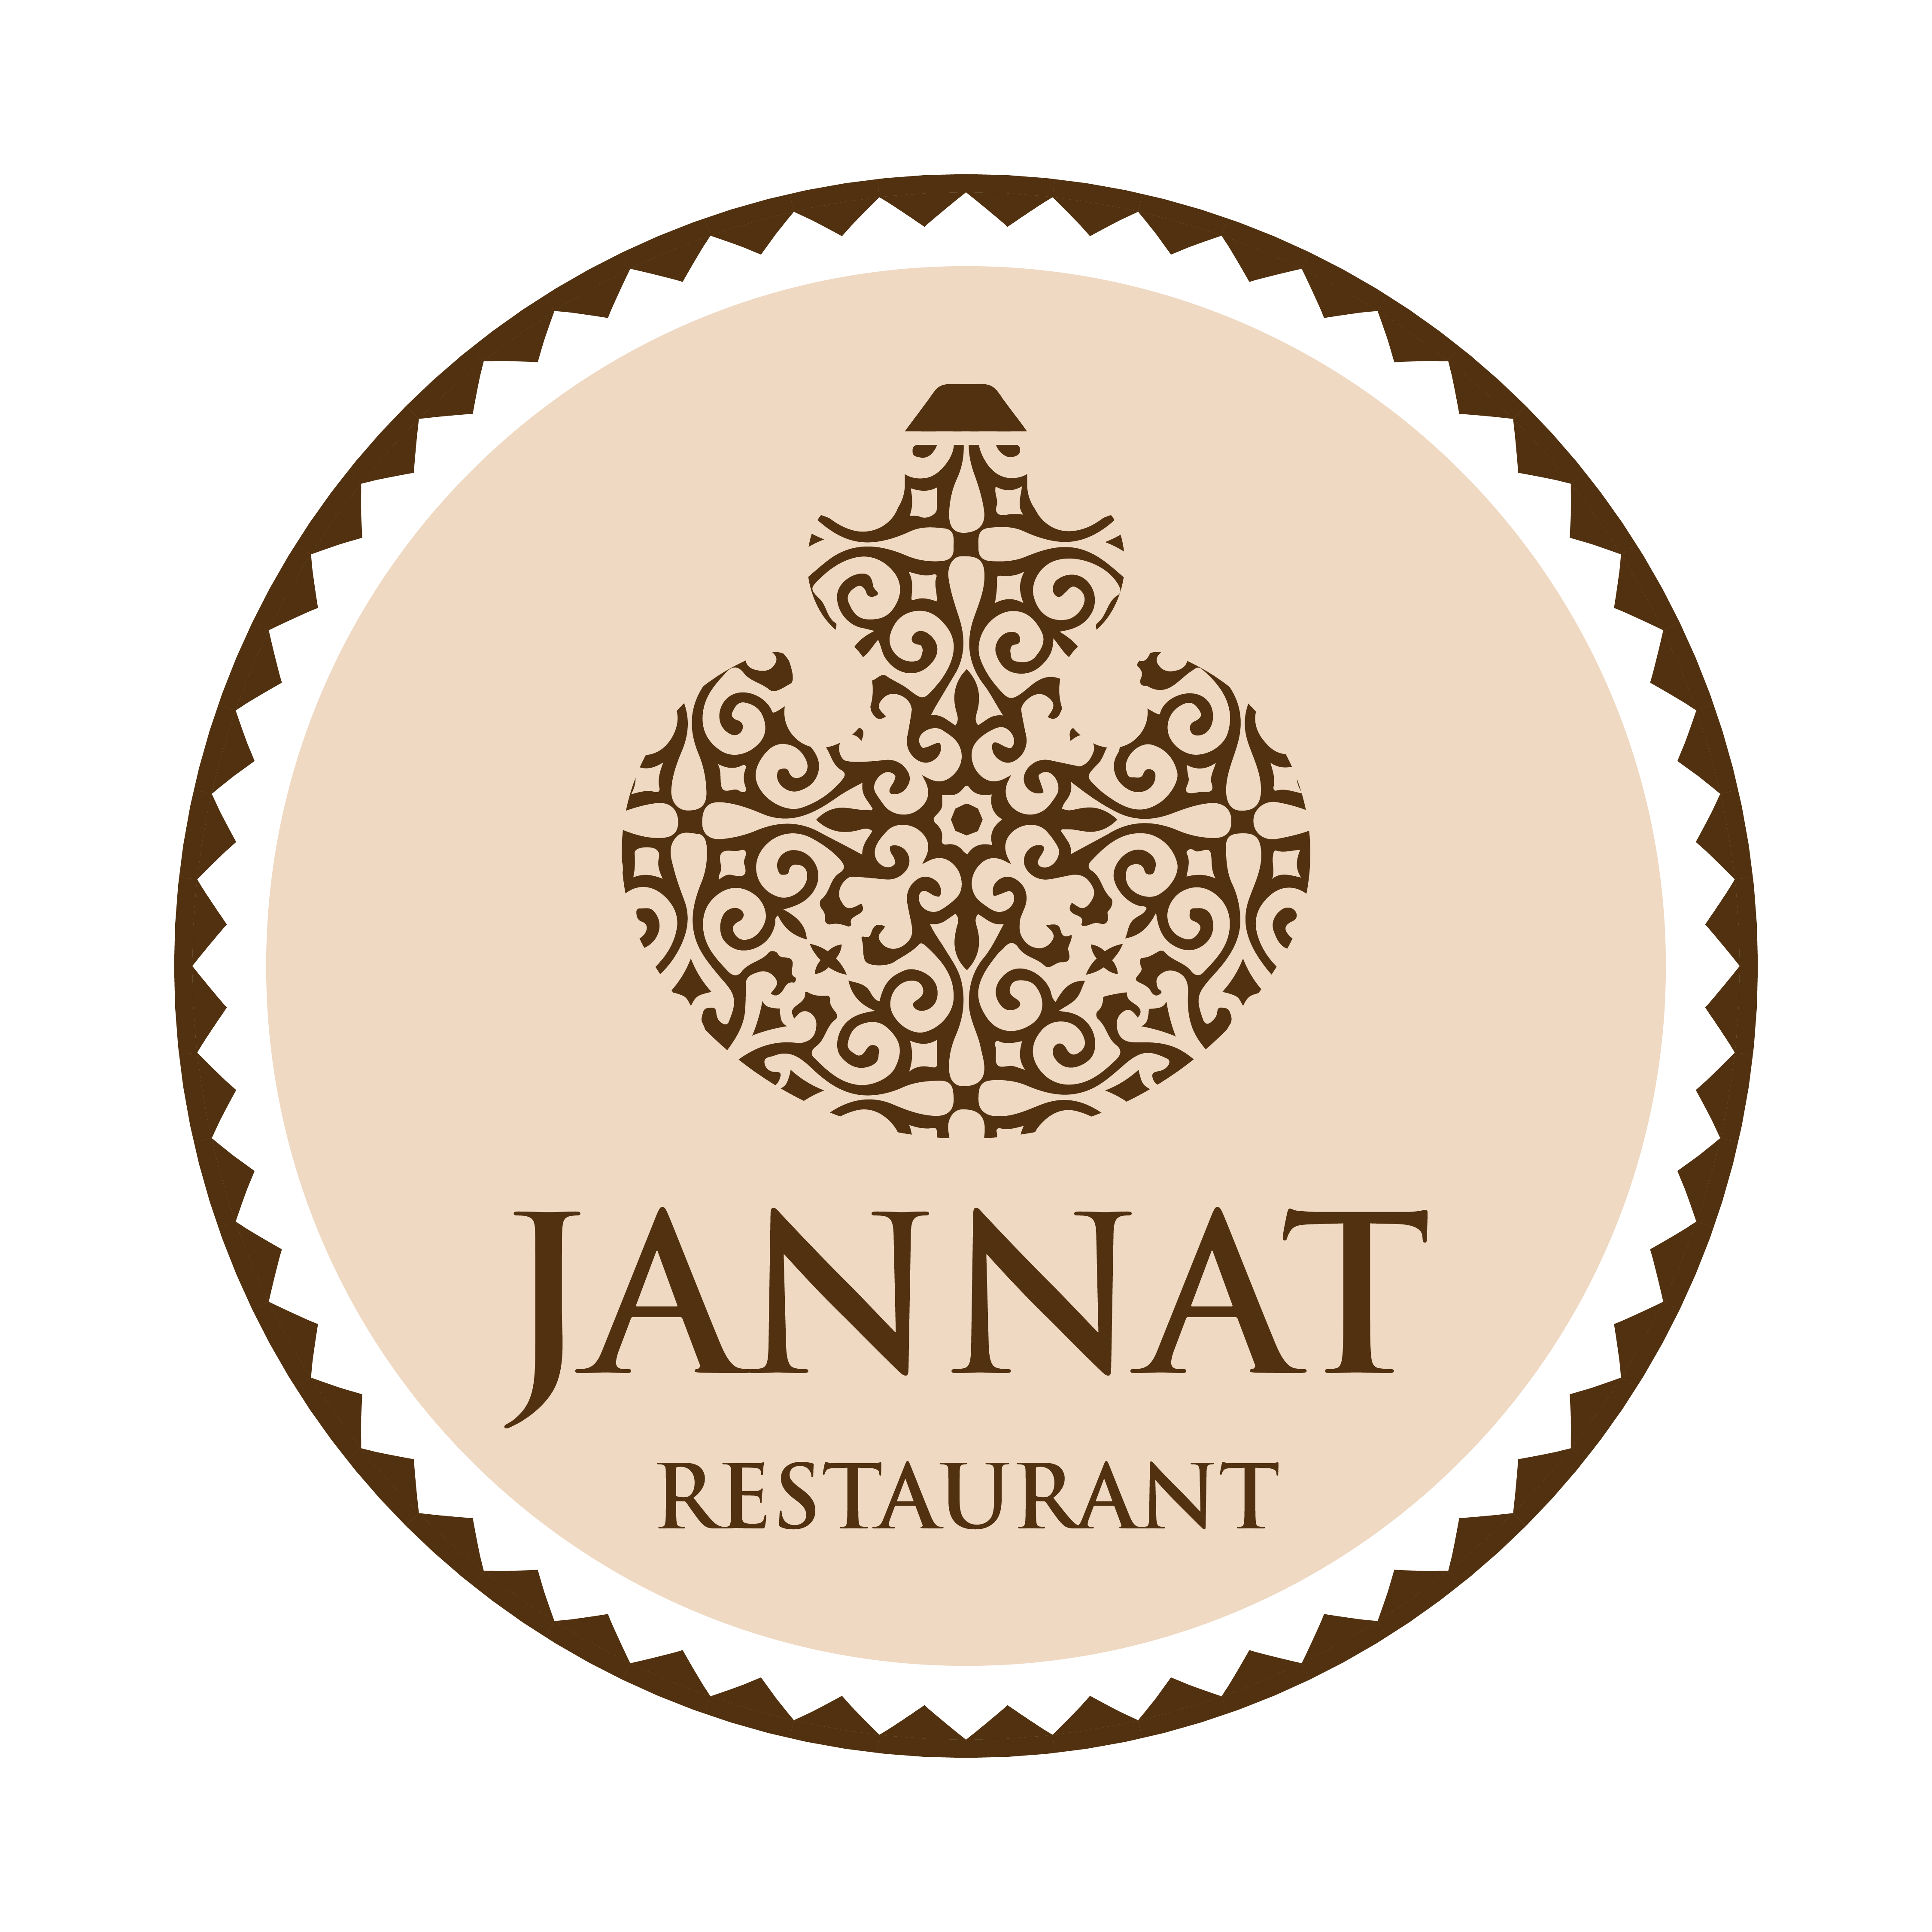 Jannat collection | Facebook